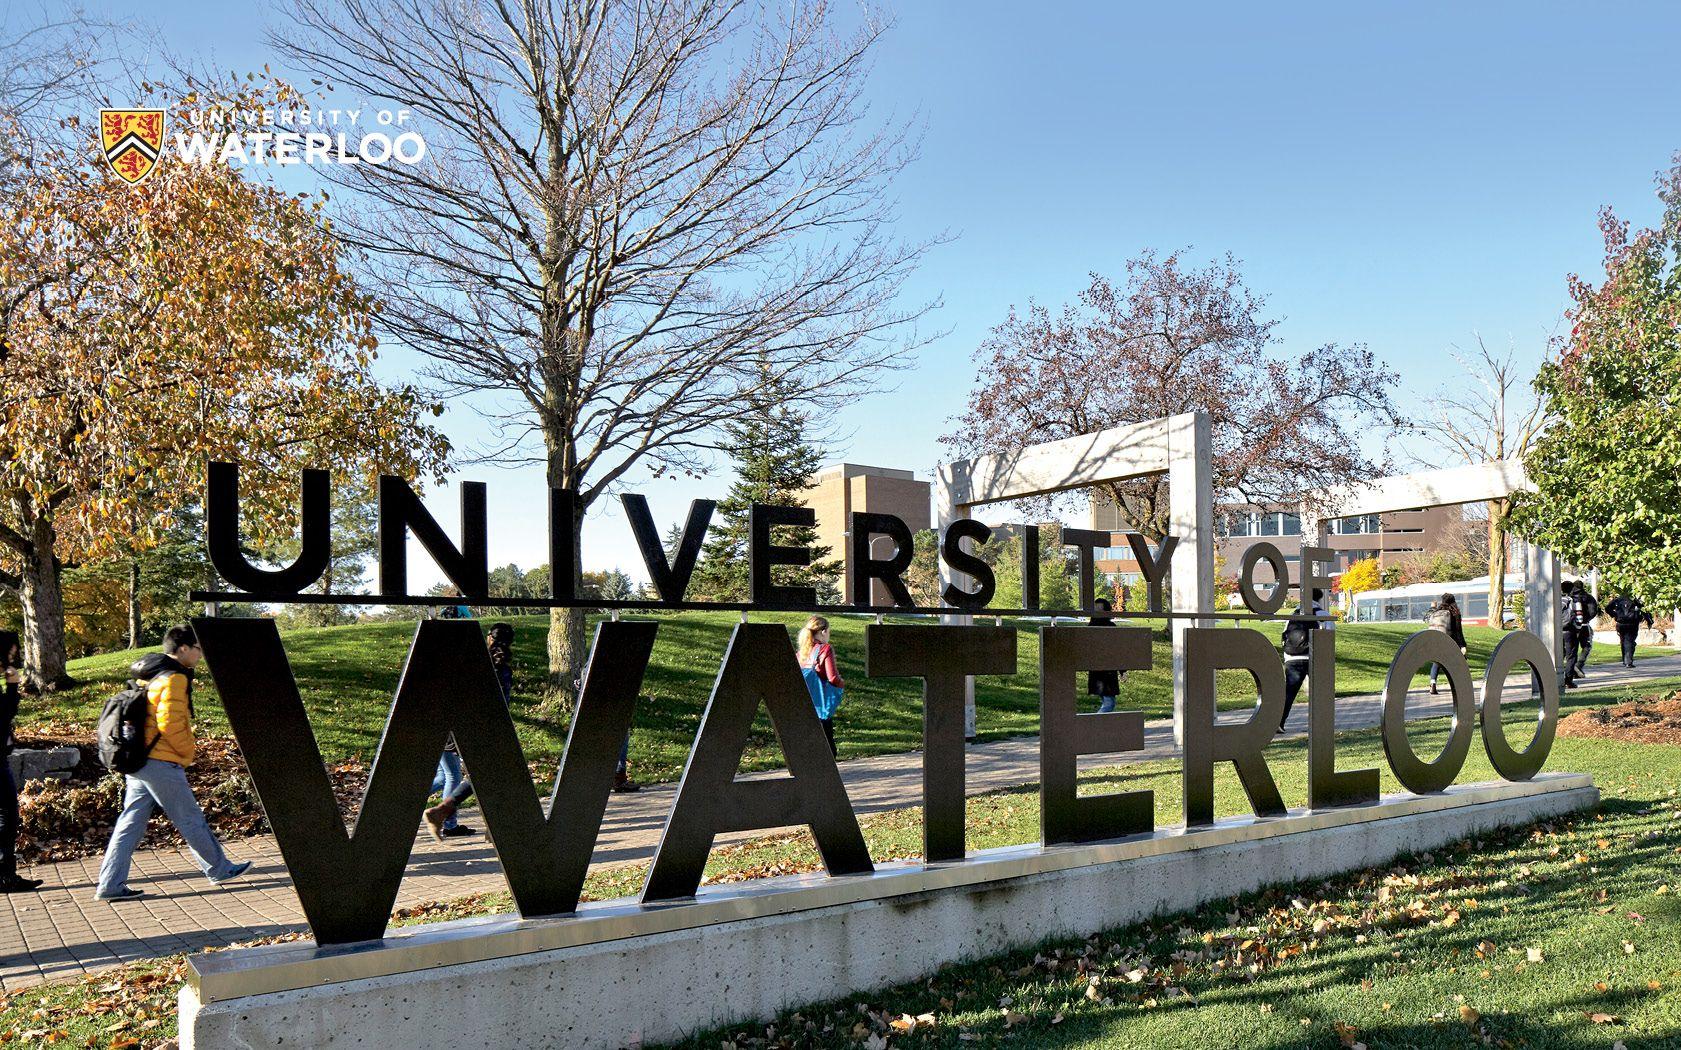 University of Waterloo wallpaper. Support Waterloo. University